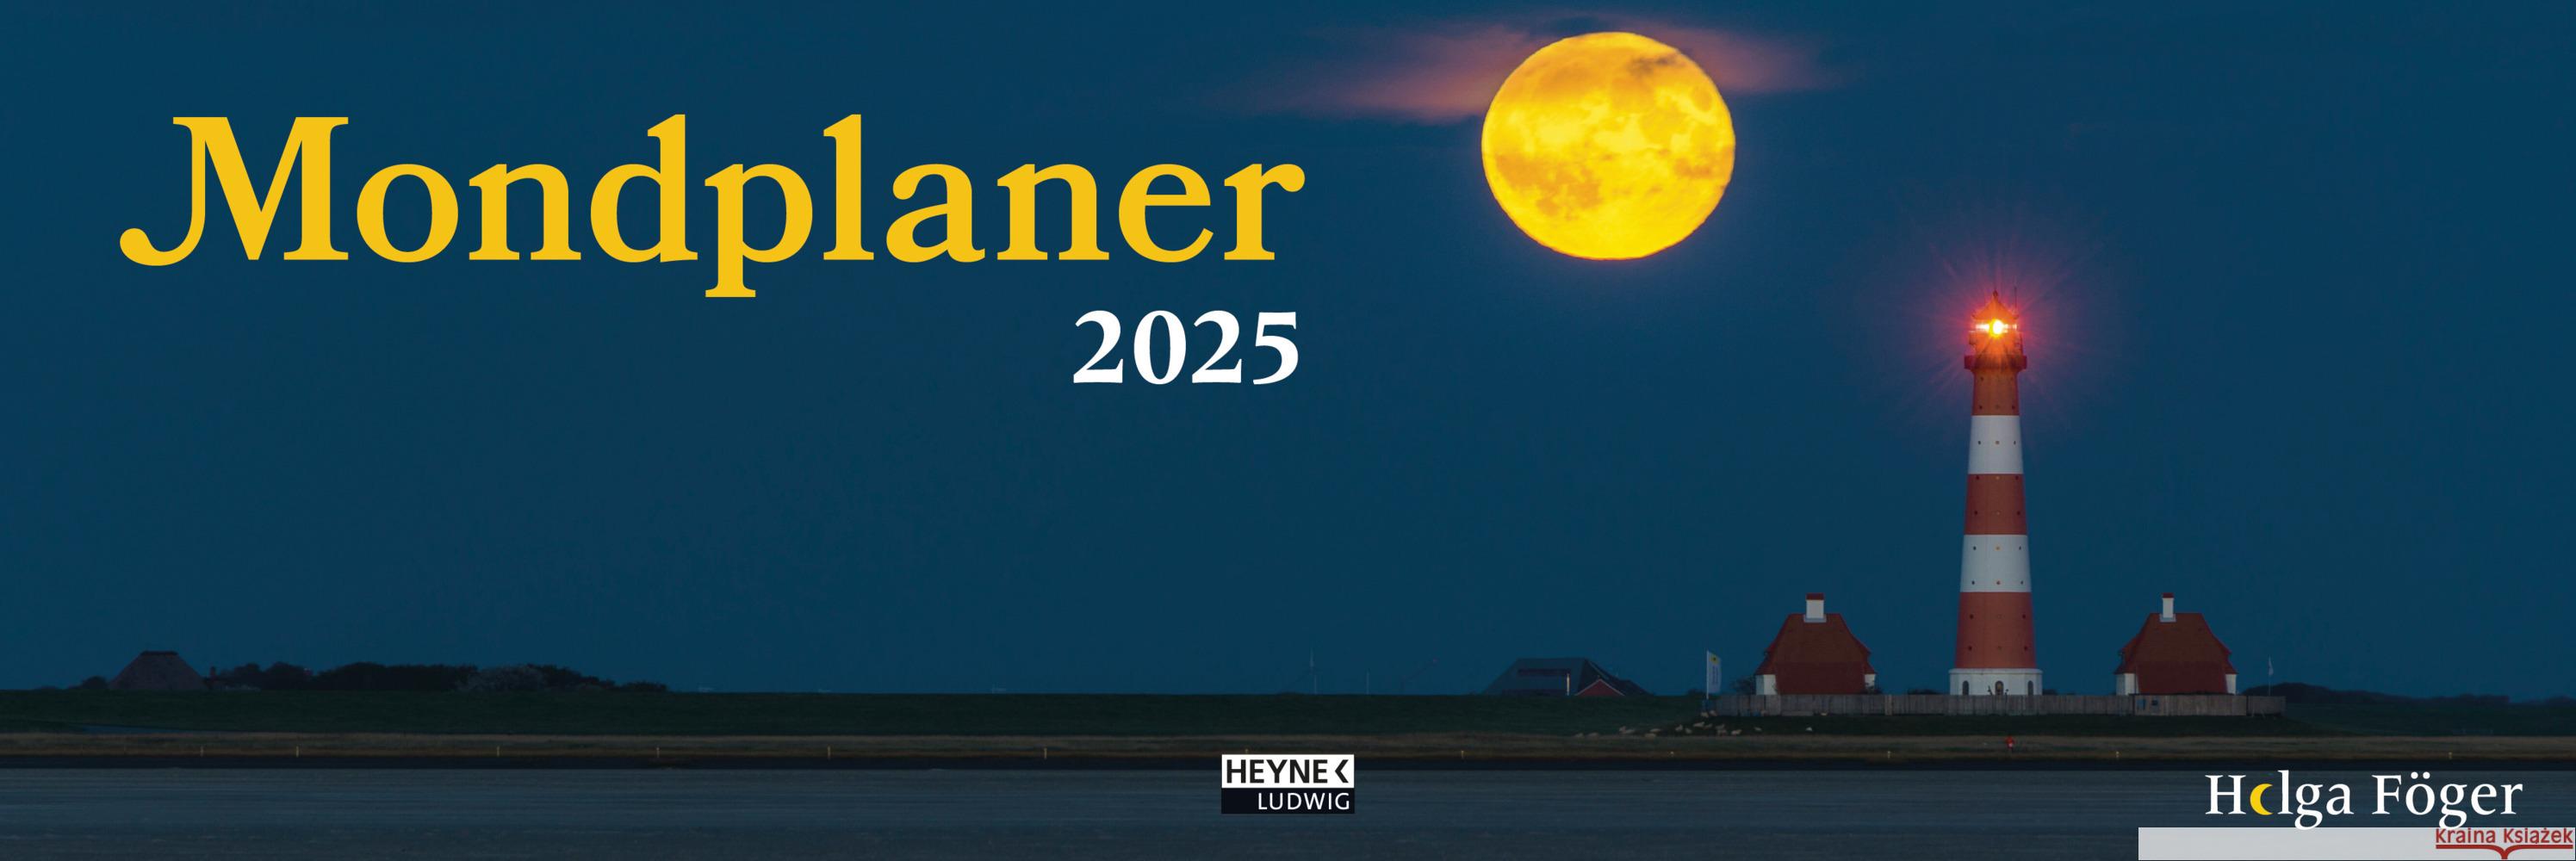 Mondplaner 2025 Föger, Helga 9783453239463